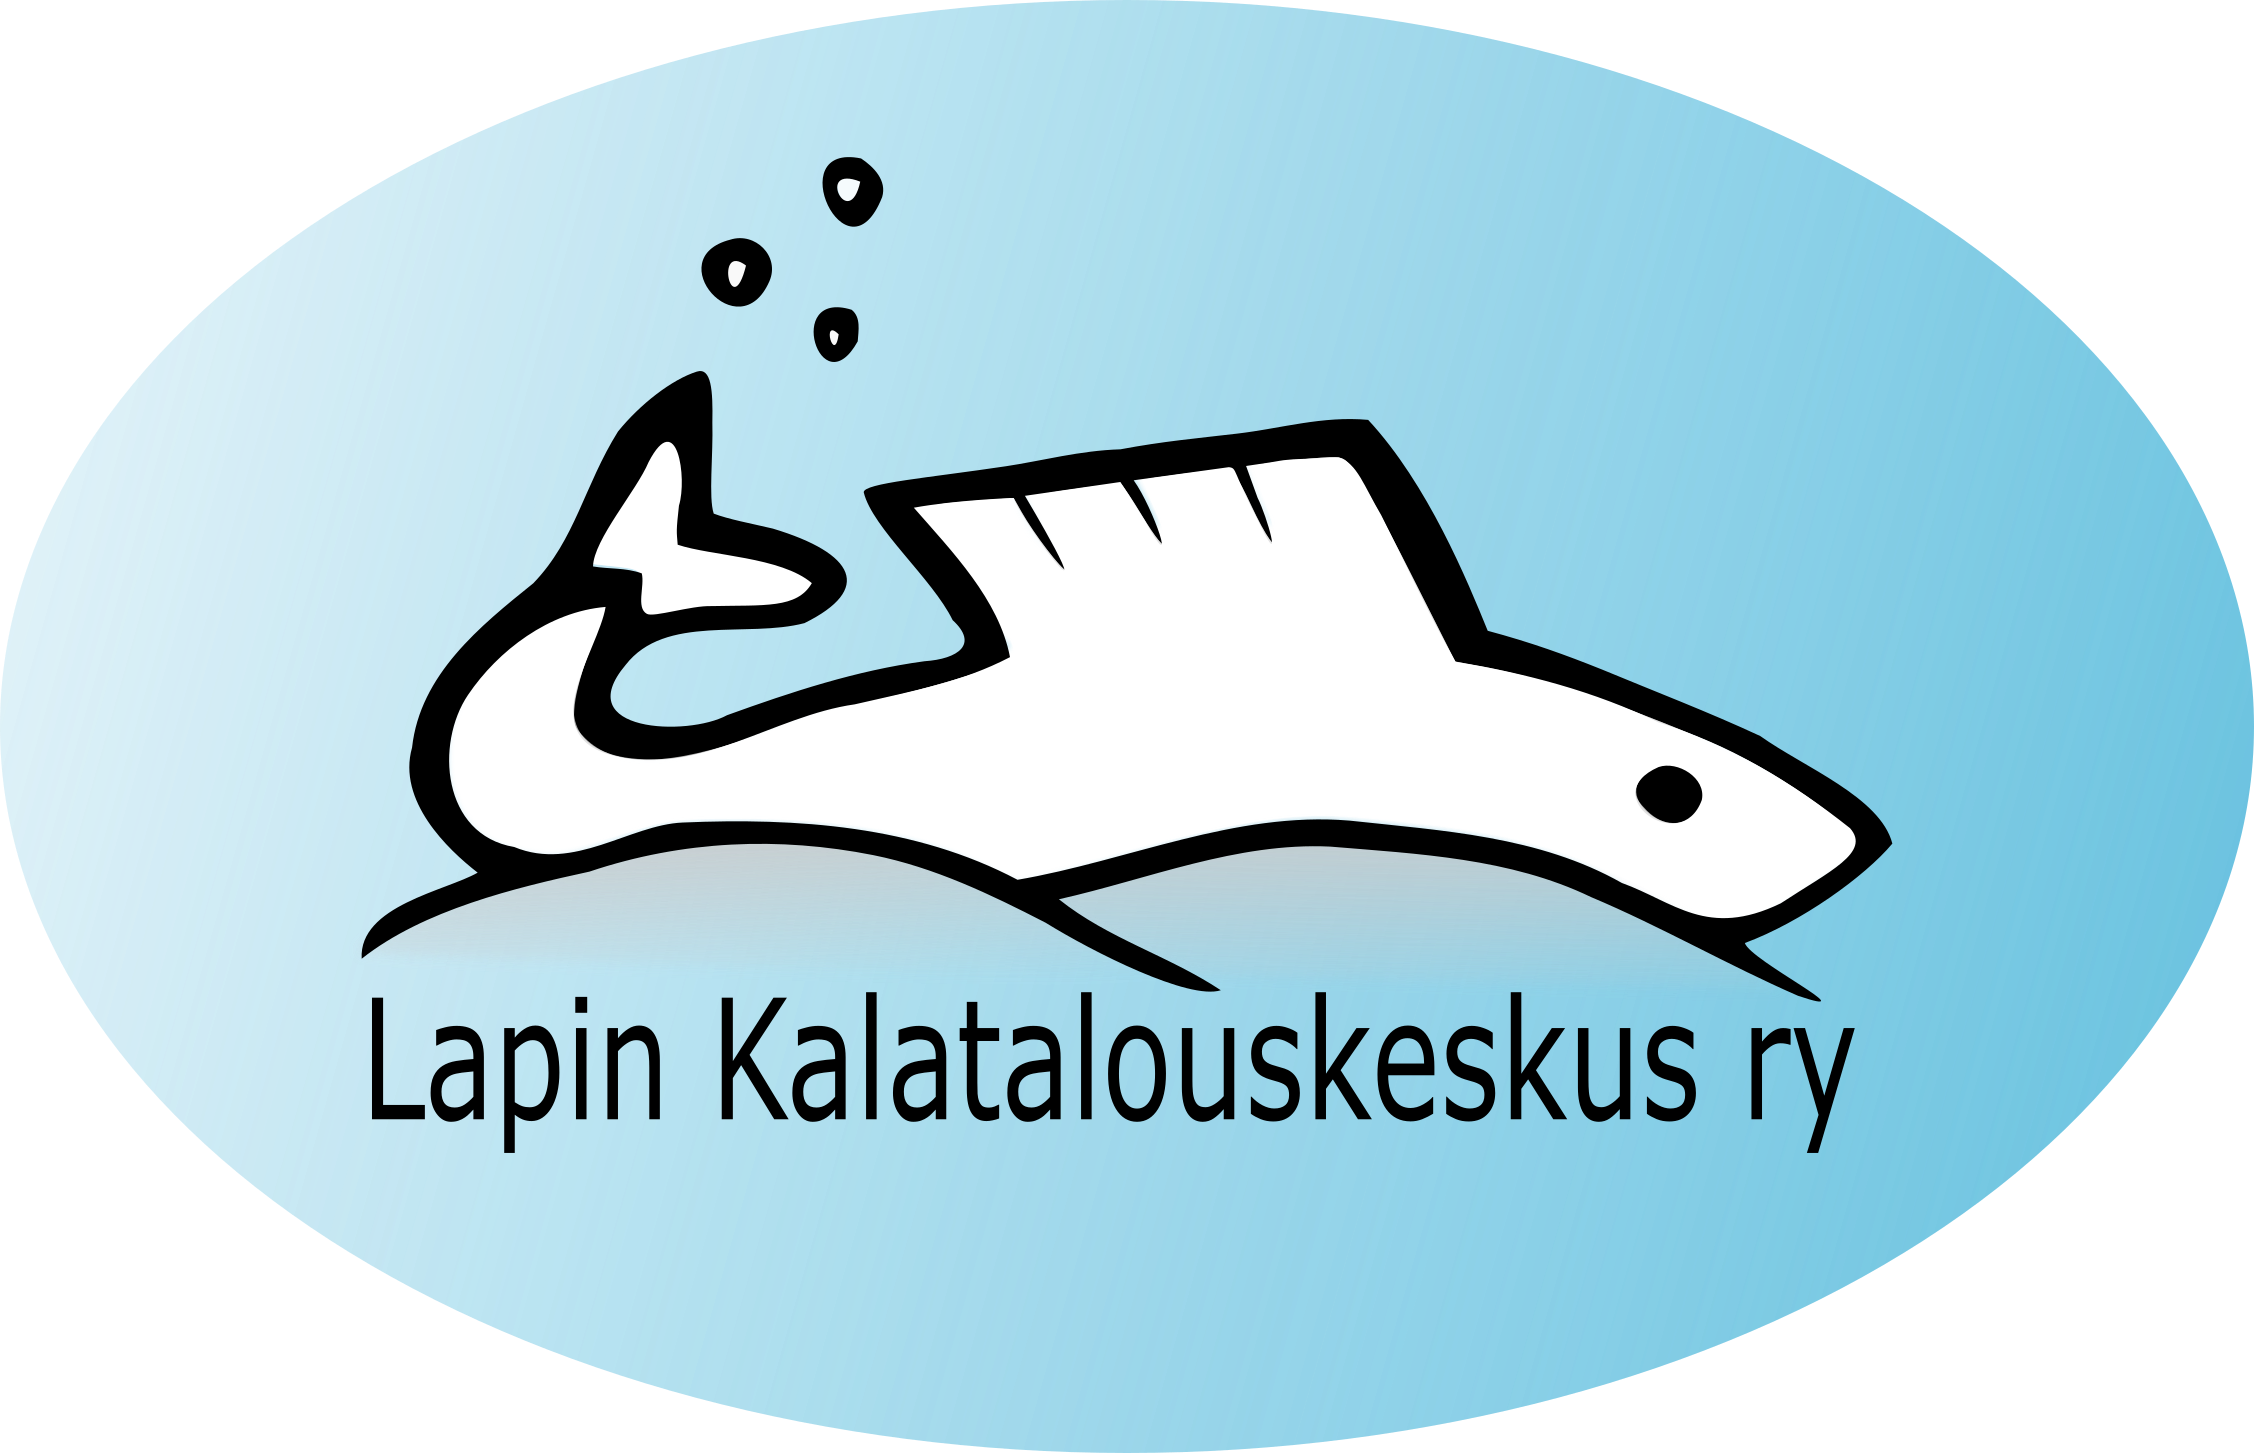 Lapin Kalatalouskeskus ry logo